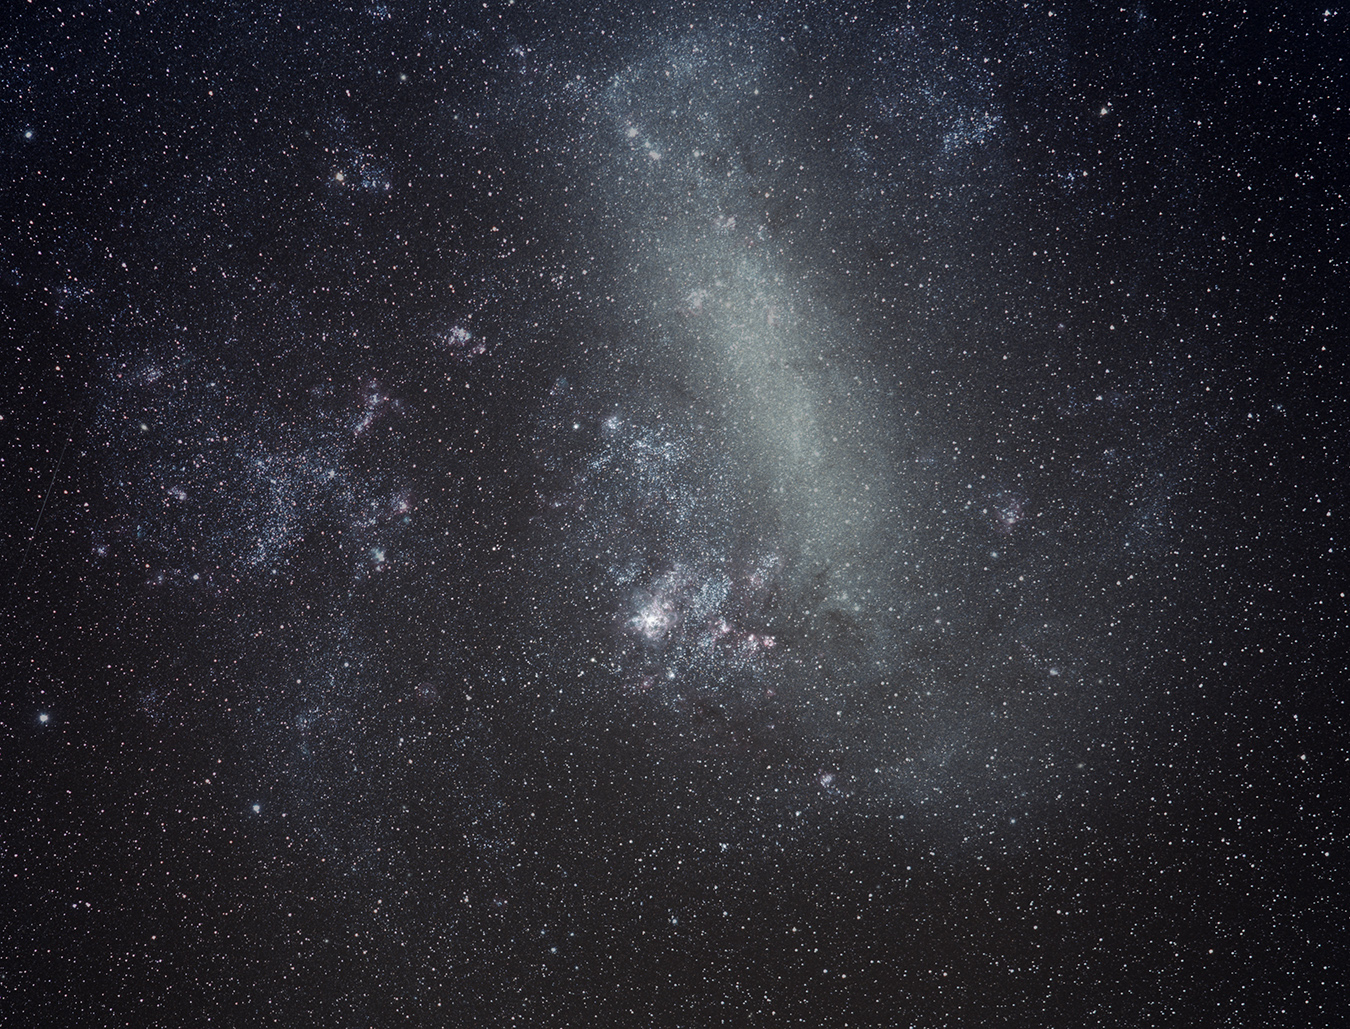 LMC NGC 2070